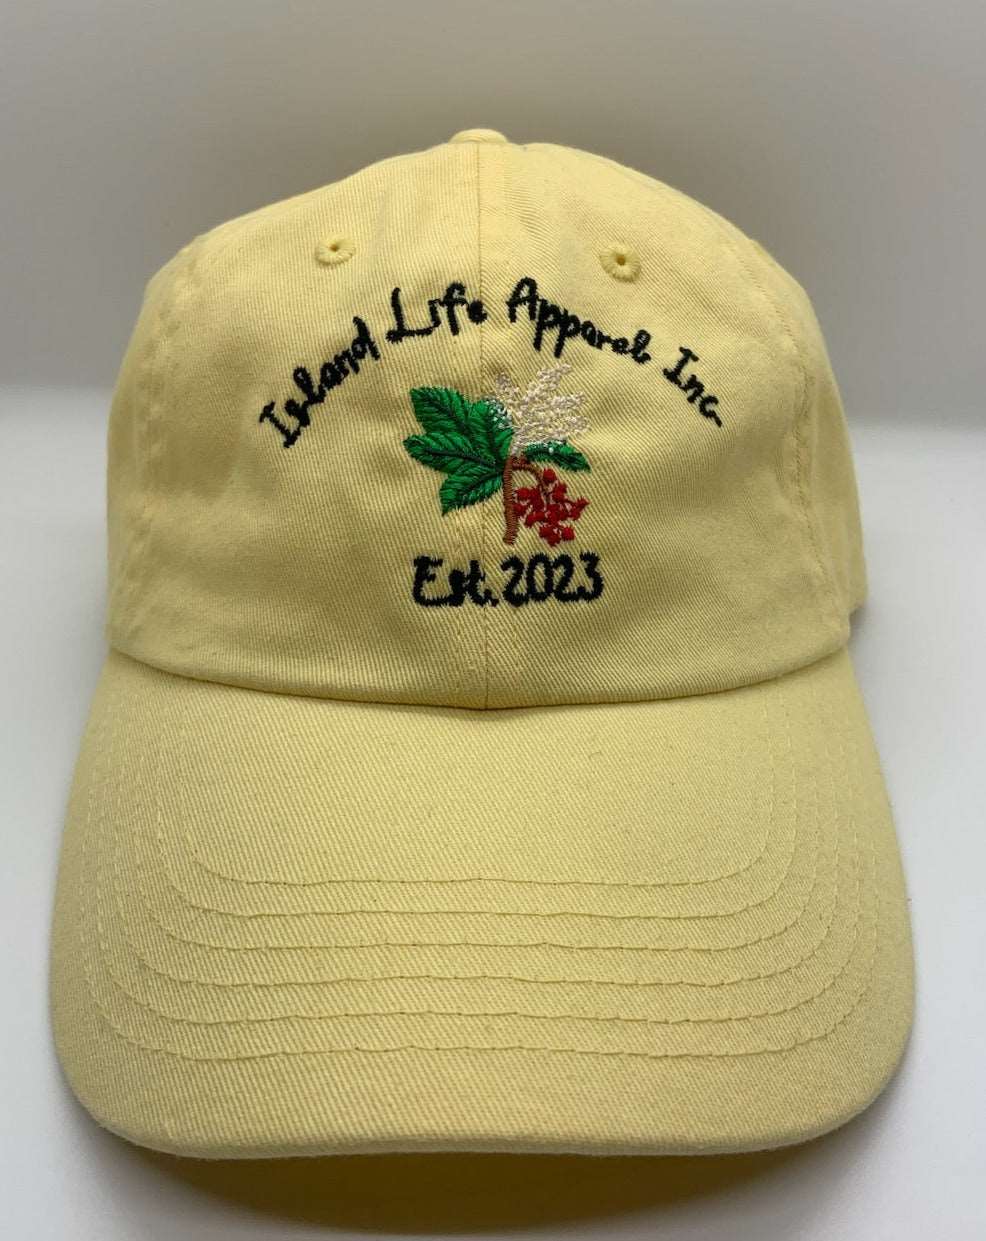 Island Life Apparel Inc. Hat - 'Heritage Cap'.